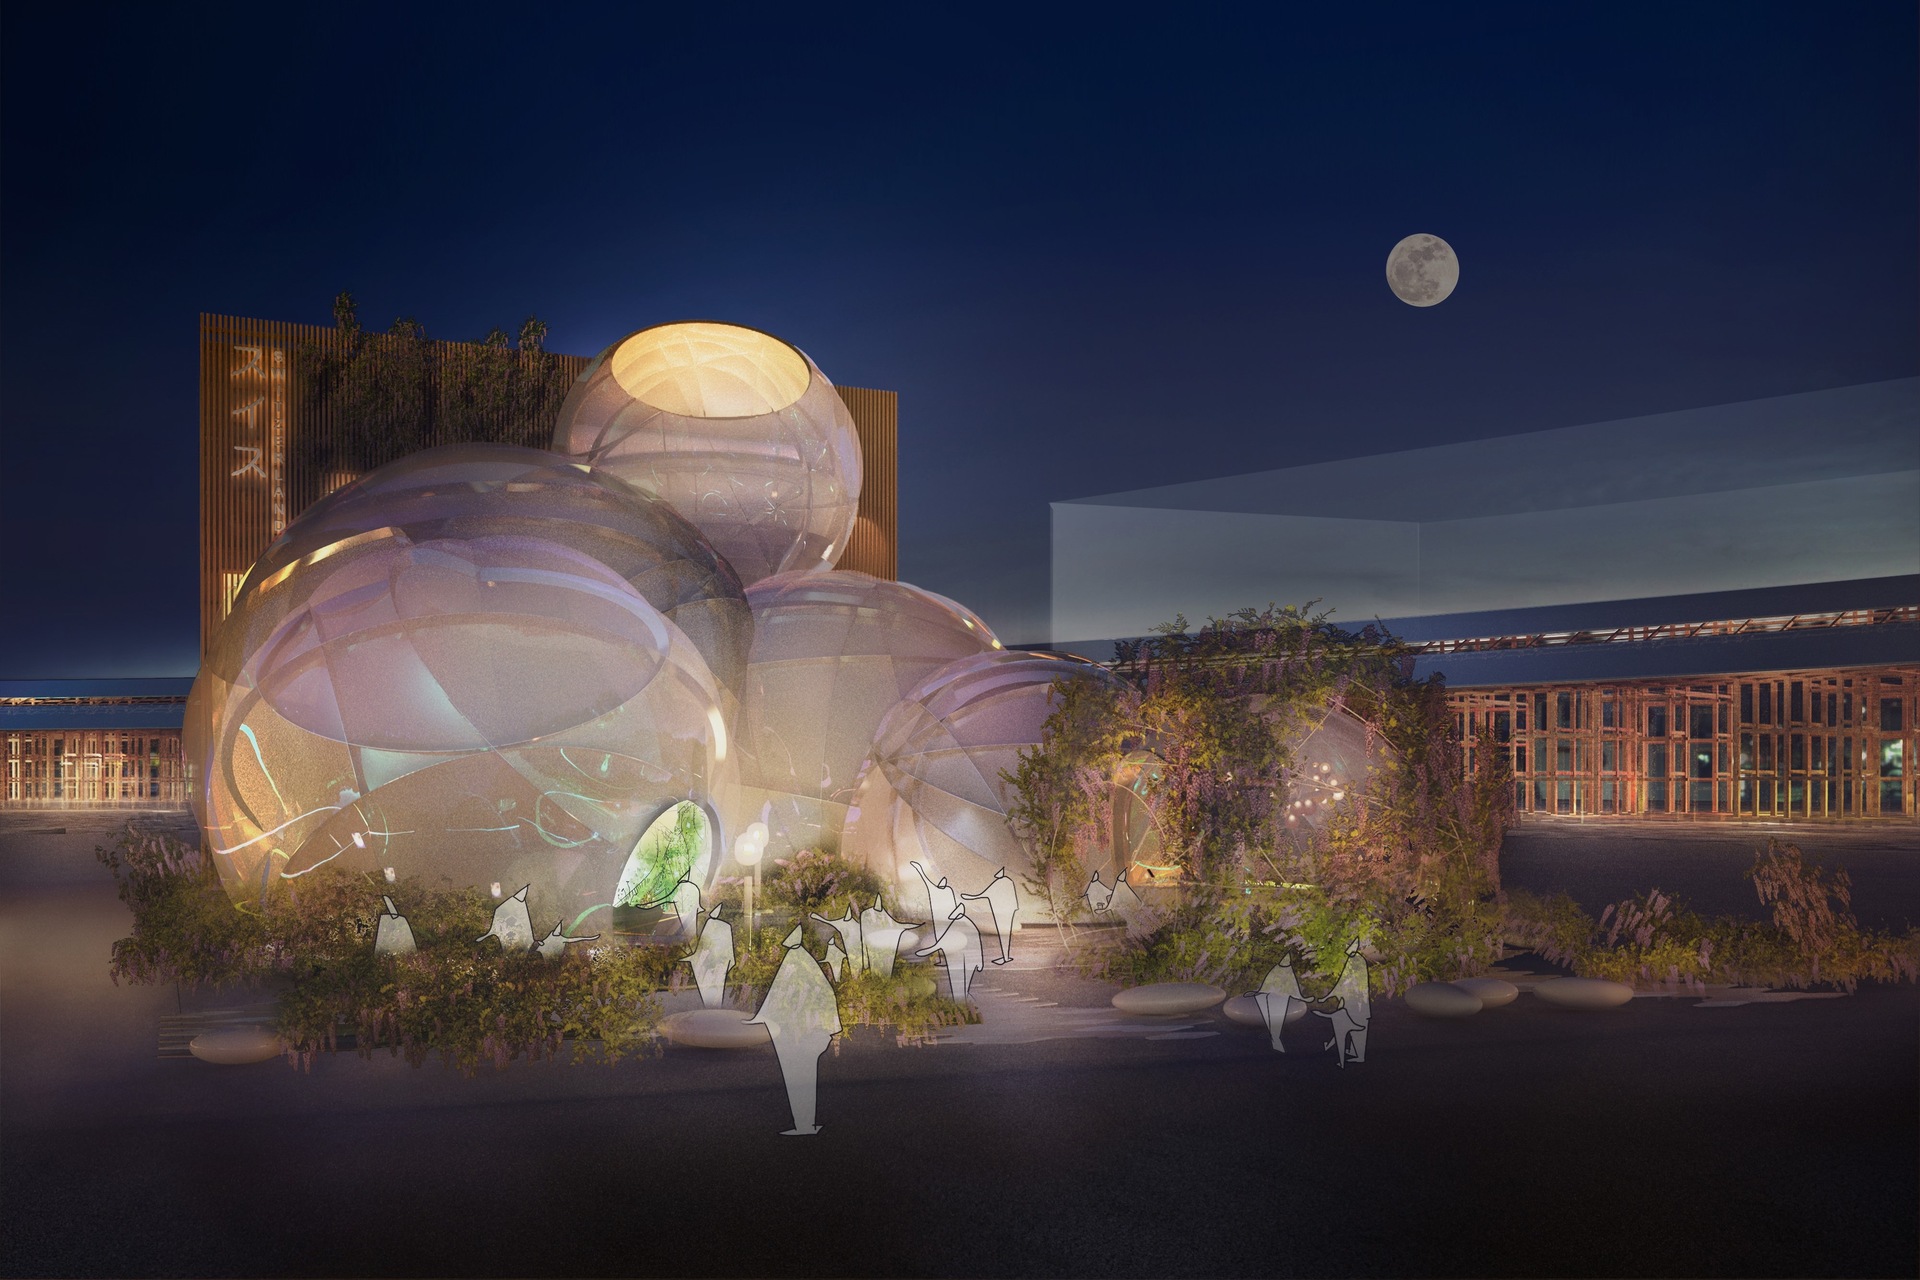 Swiss Pavilion: Το Swiss Pavilion στην Expo 2025 στην Οσάκα δεν θα τραβήξει την προσοχή μόνο για τη δομή του πλανήτη, που διακρίνεται από πέντε